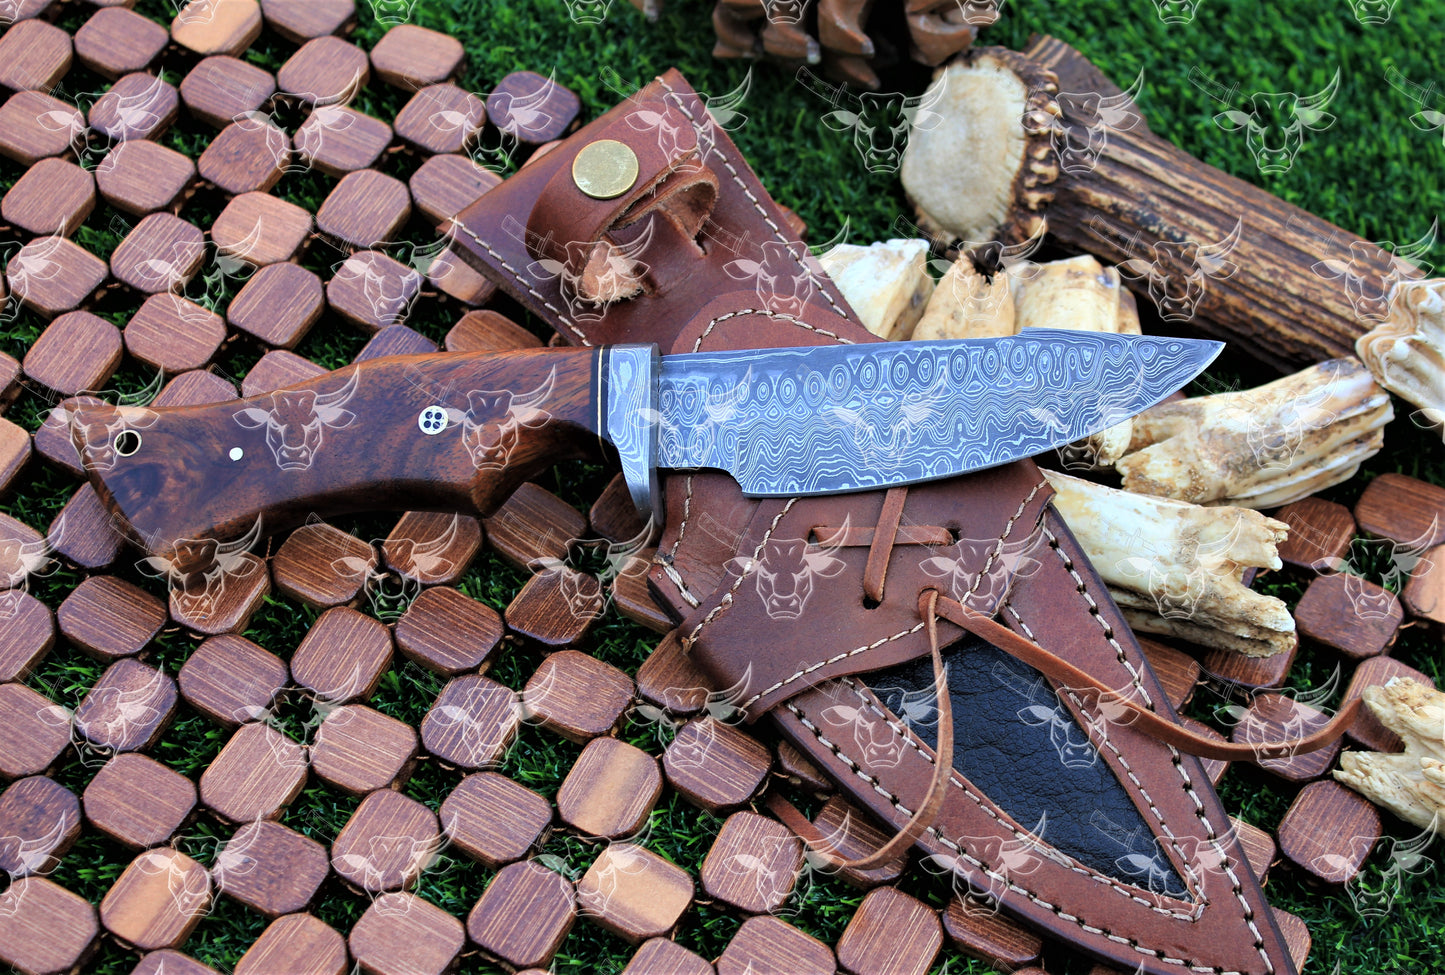 EBK-24 Premium Handmade Damscus steel Knife, Handforged Damascus Blade, Wood handle , LEather sheath with snake pattern